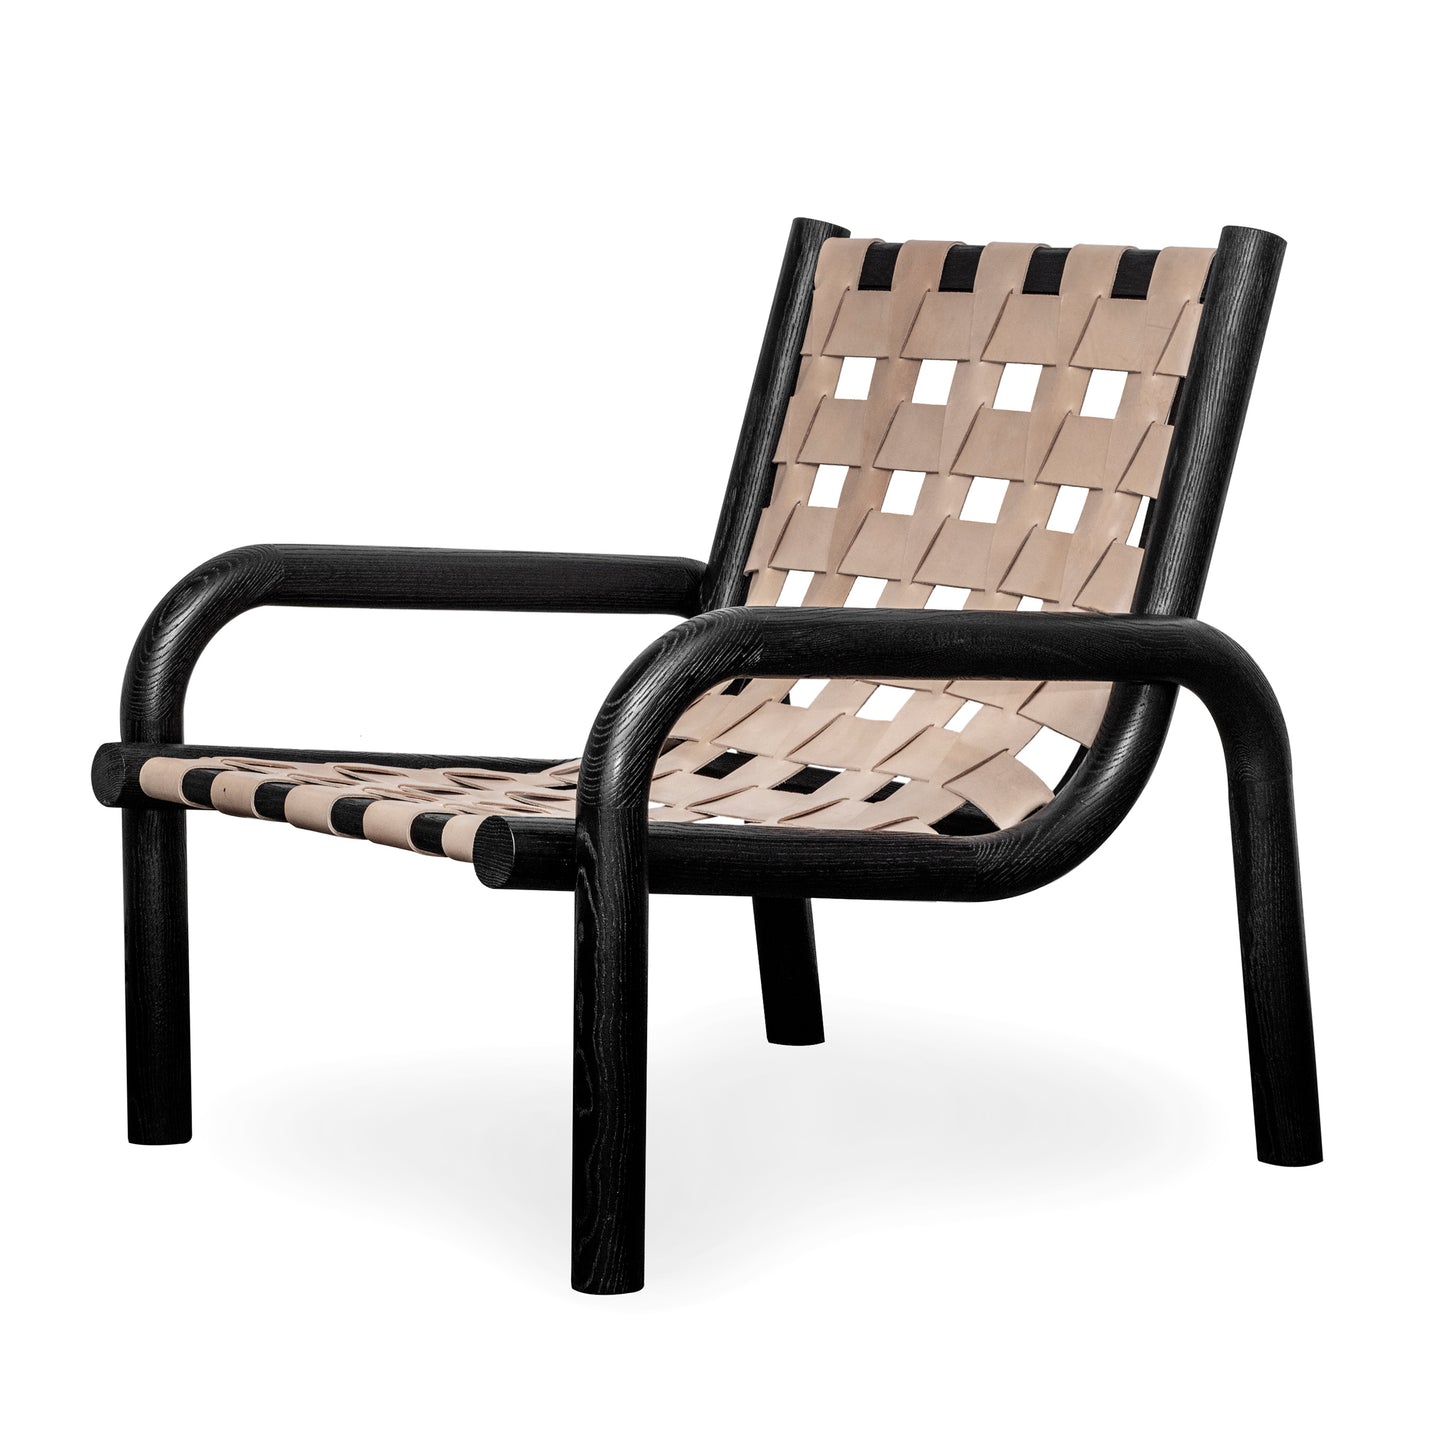 GINGA I Lounge Chair by Duistt